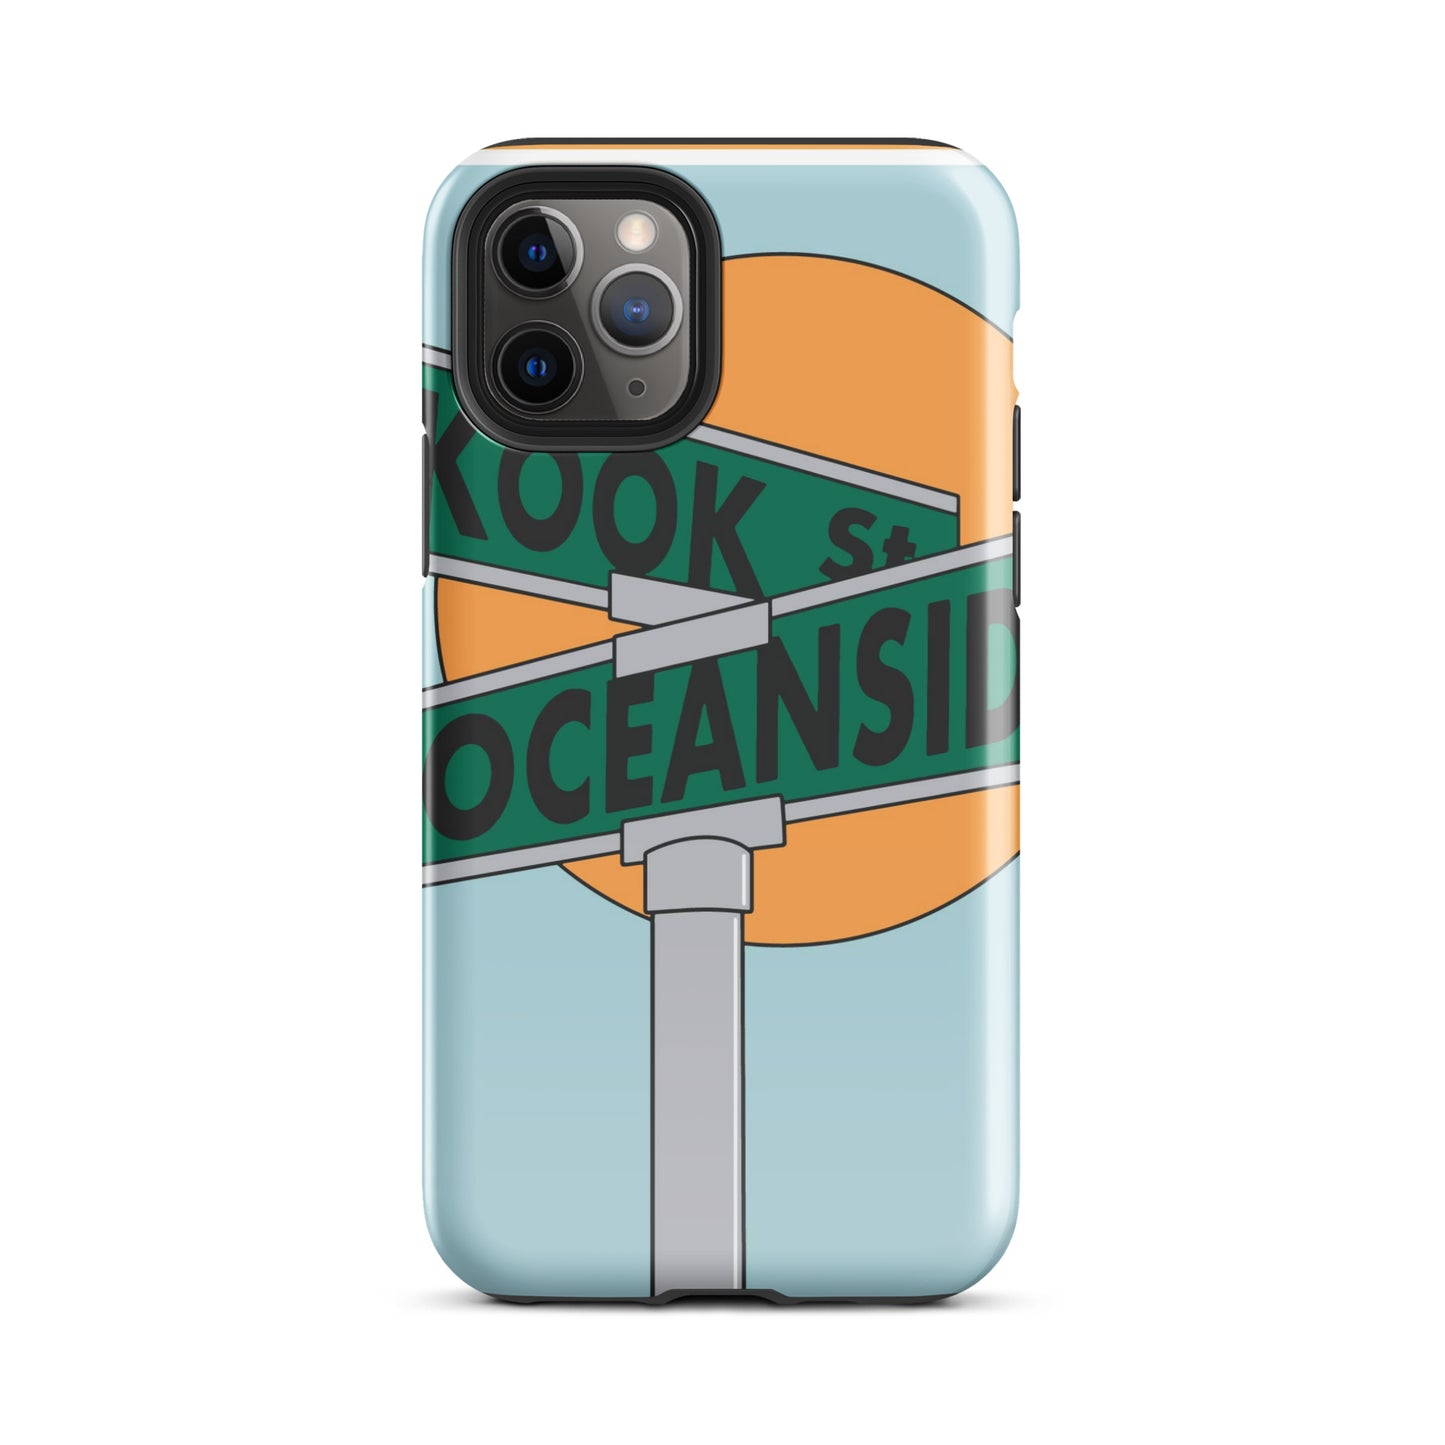 Kook Street iPhone® Case